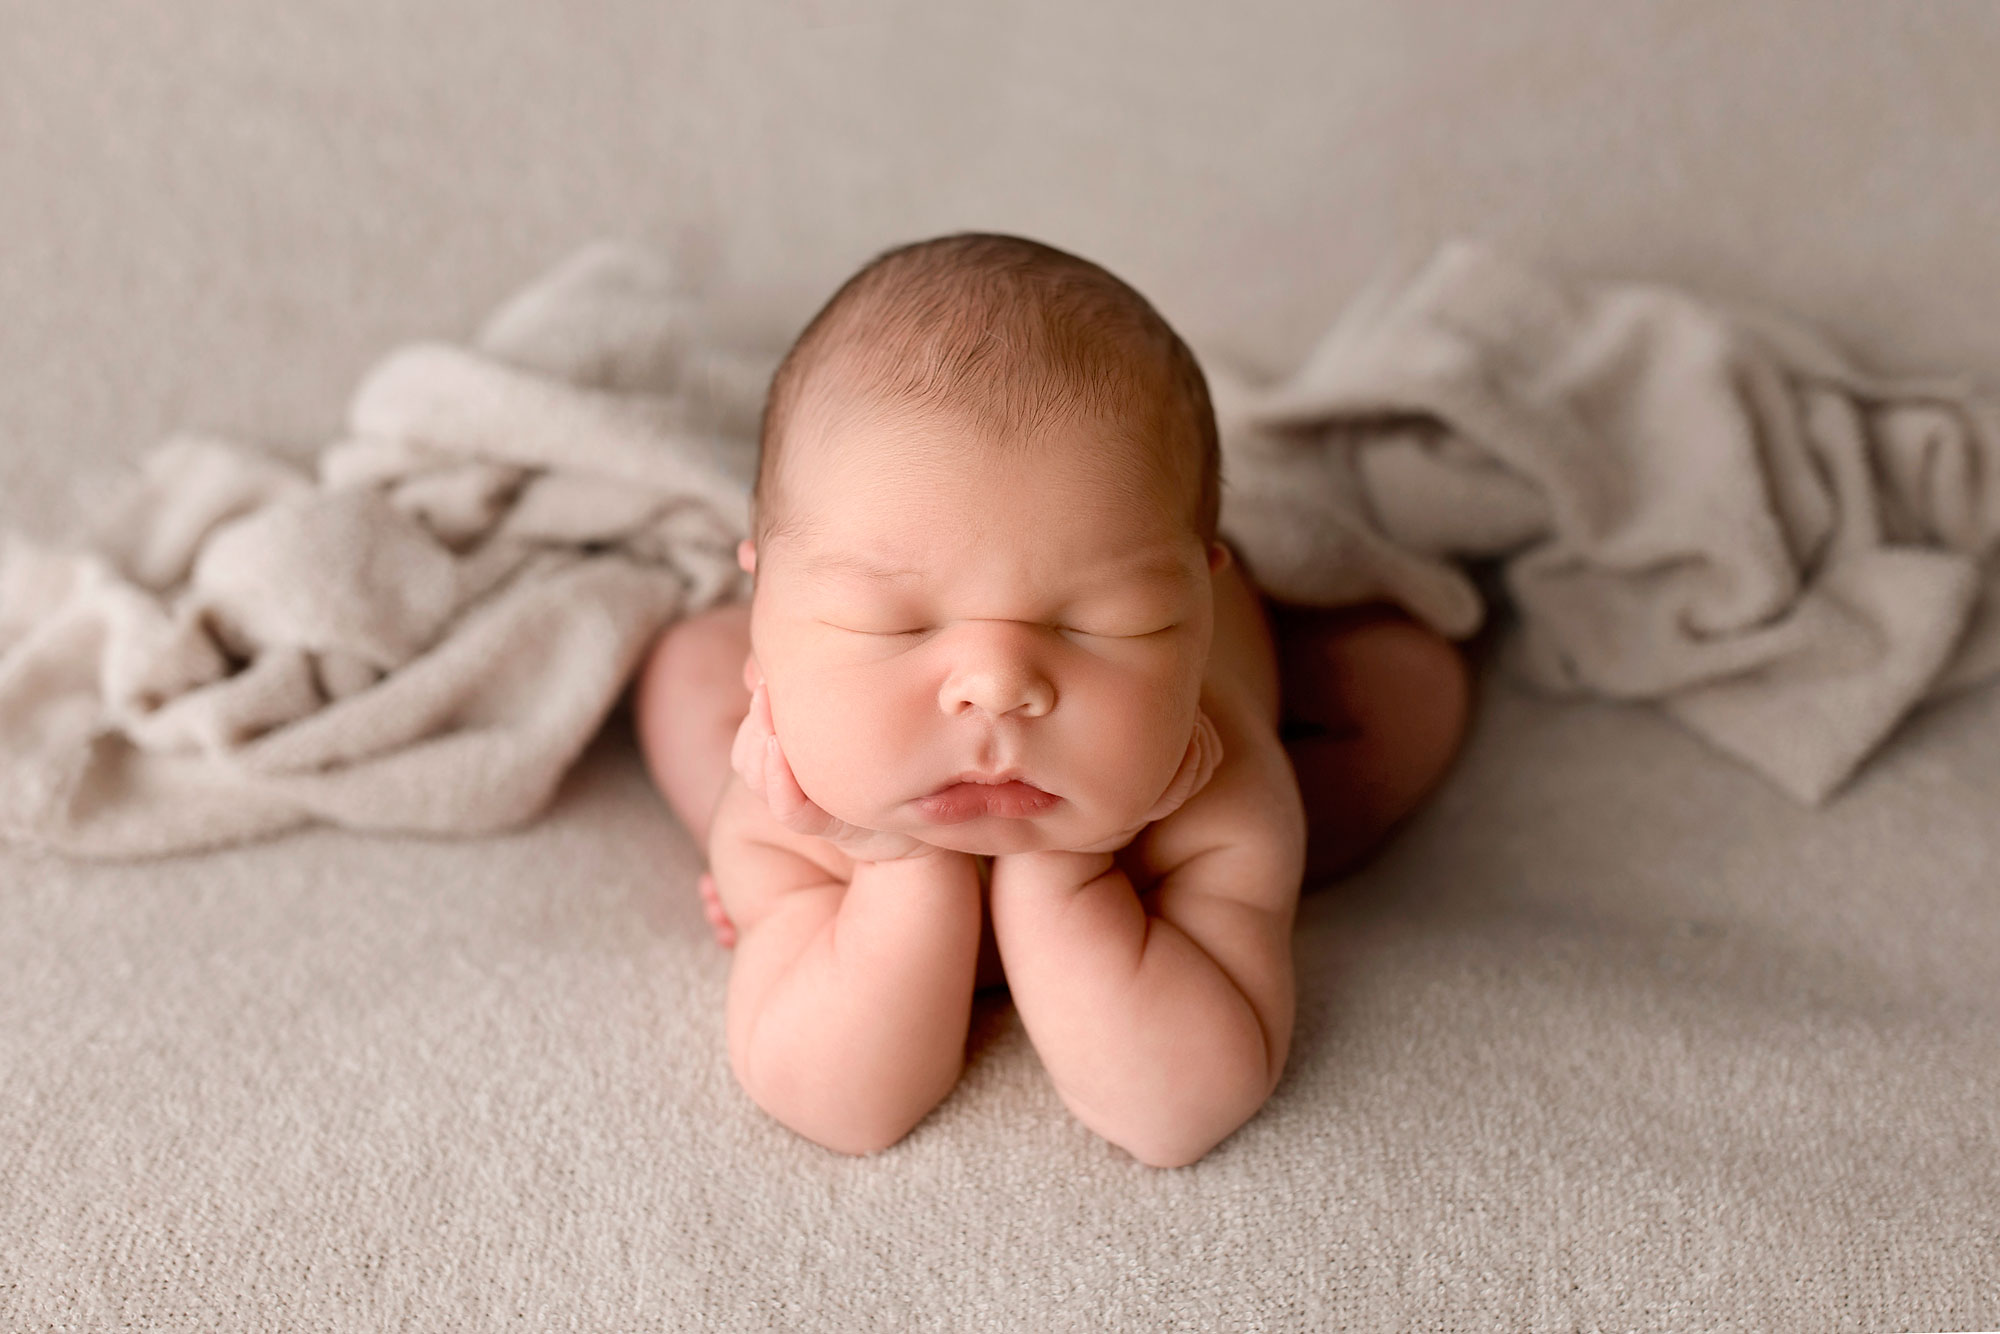 nj newborn photos showing a baby boy 